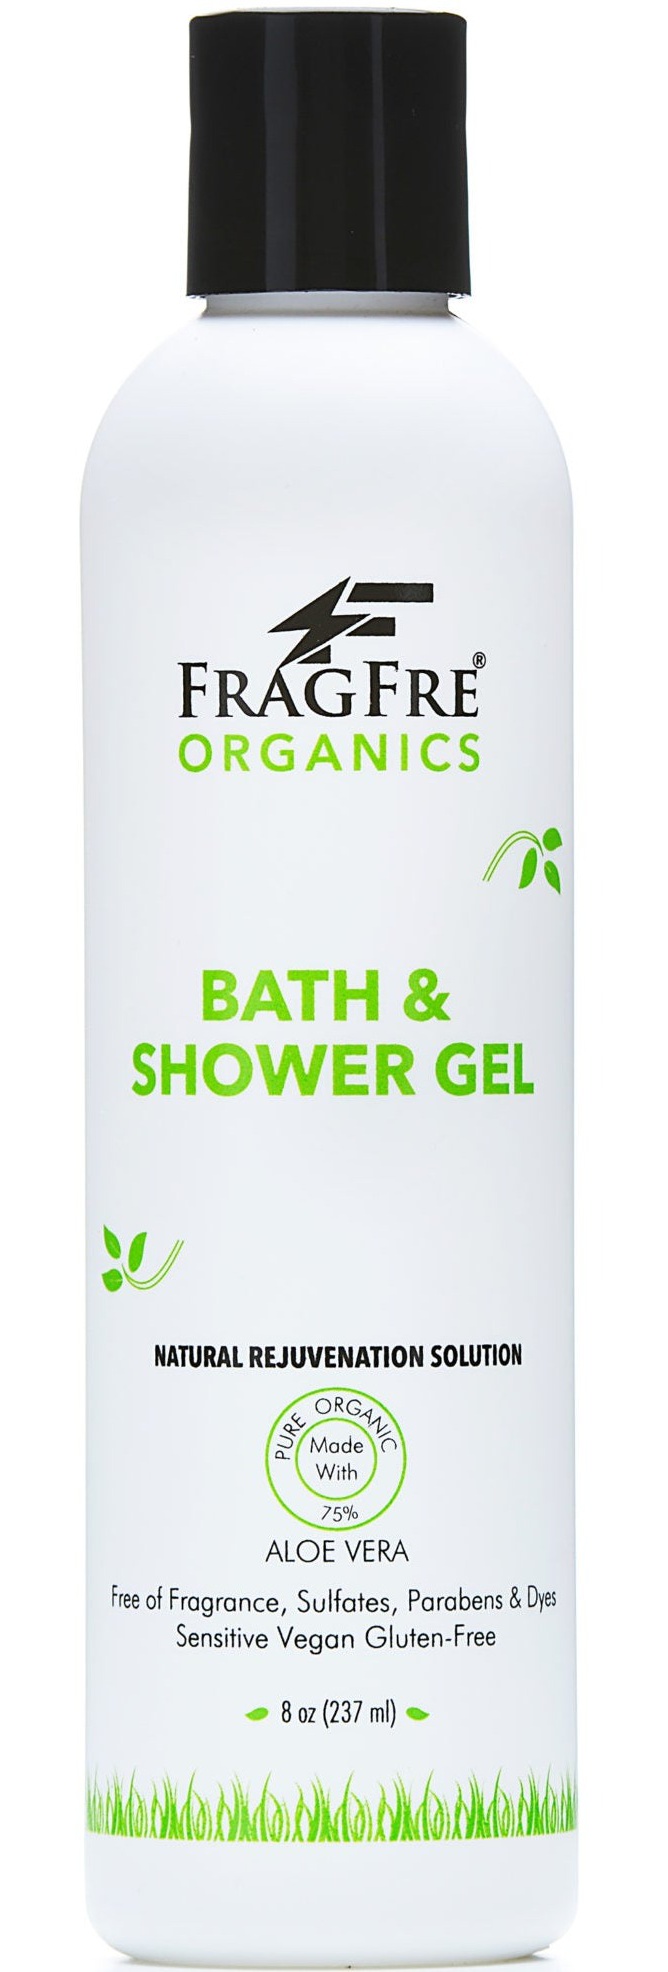 Fragfre Organic Shower Gel